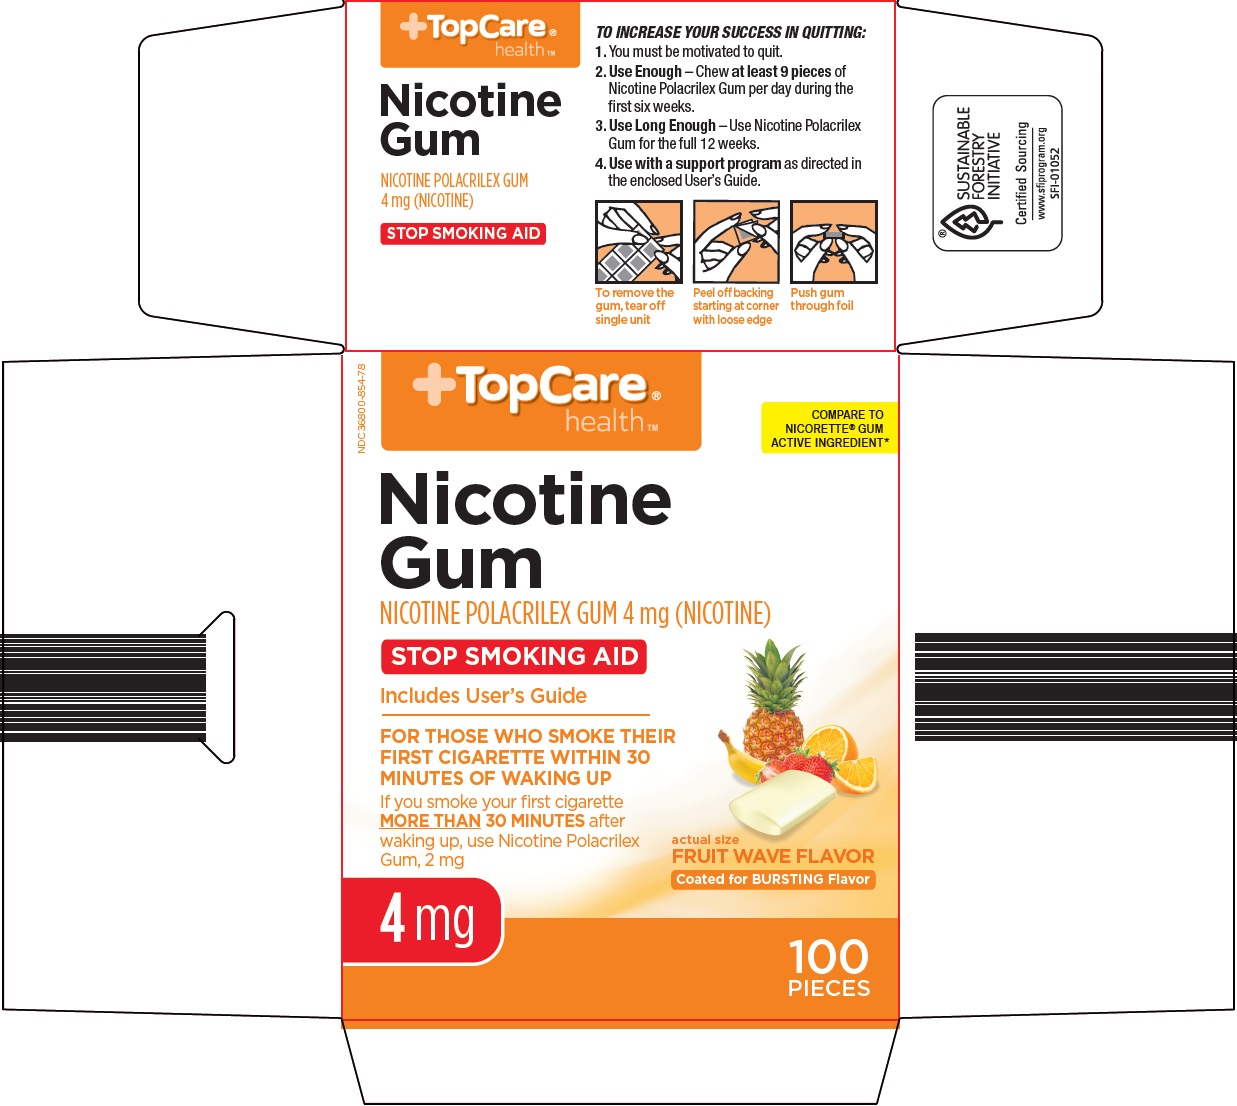 854-88-nicotine-gum-1.jpg